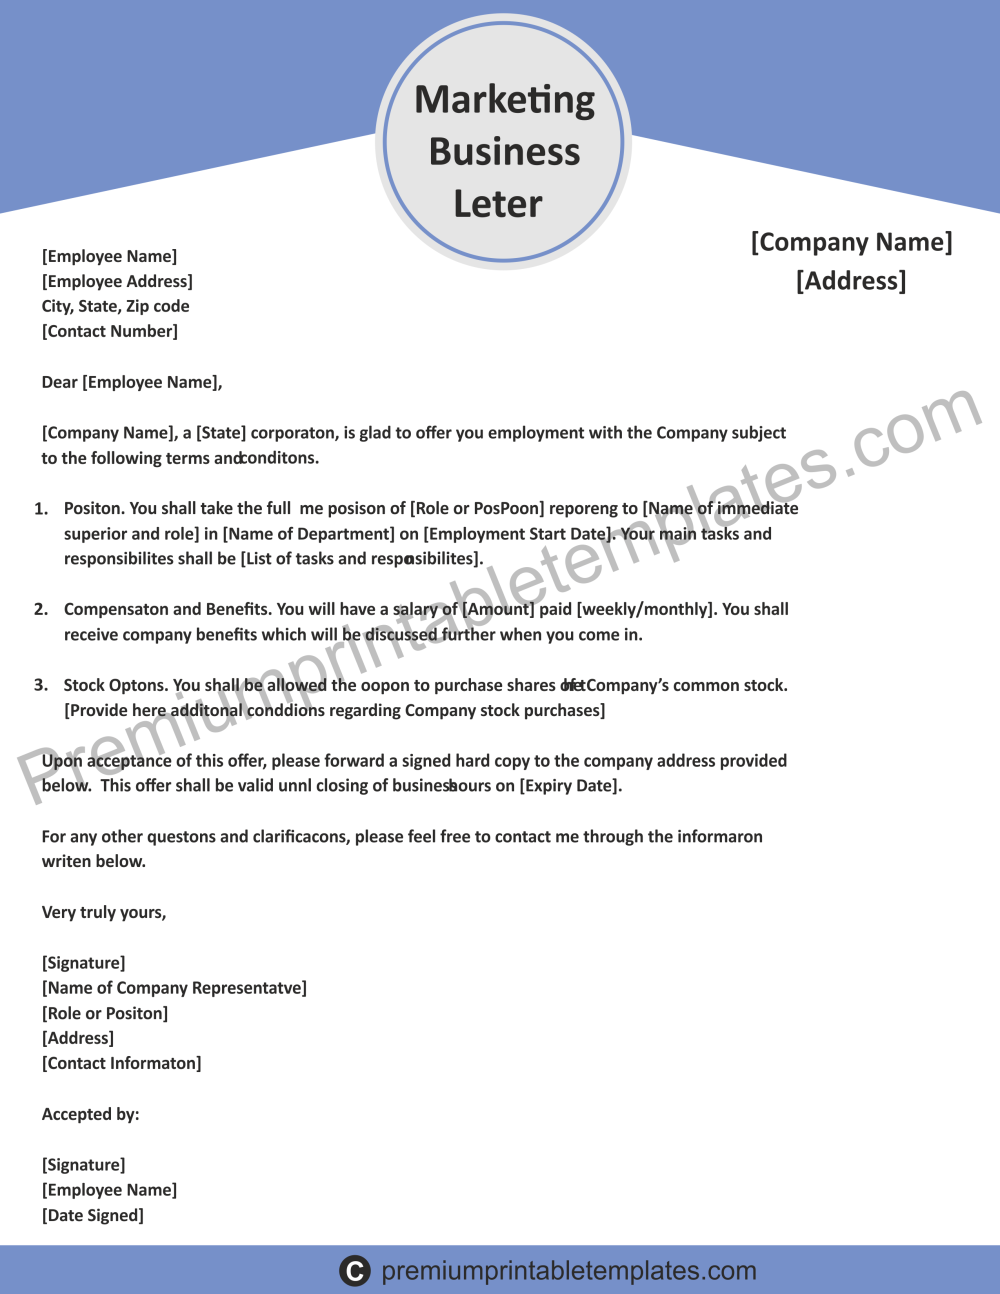 printable marketing business letter